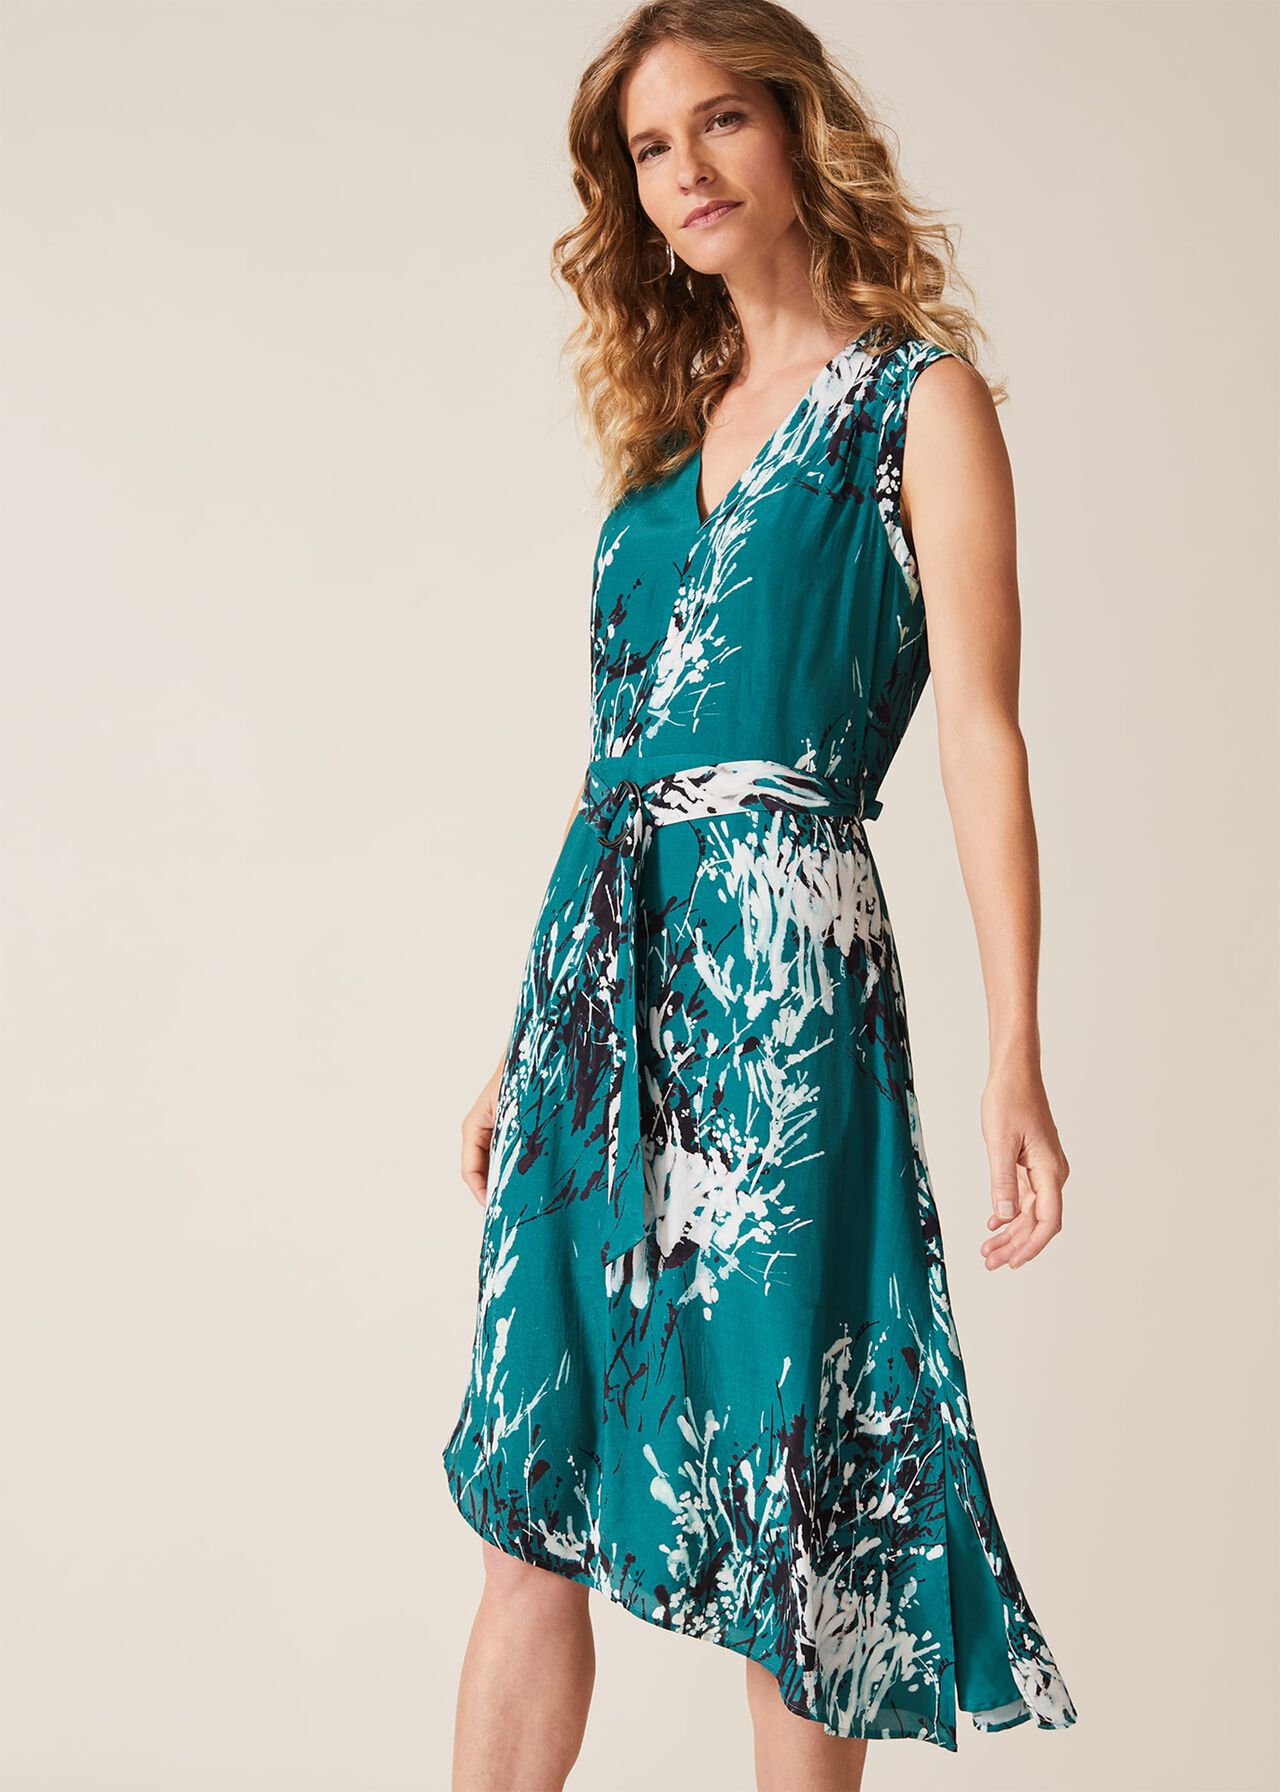 Laverne Printed Dress